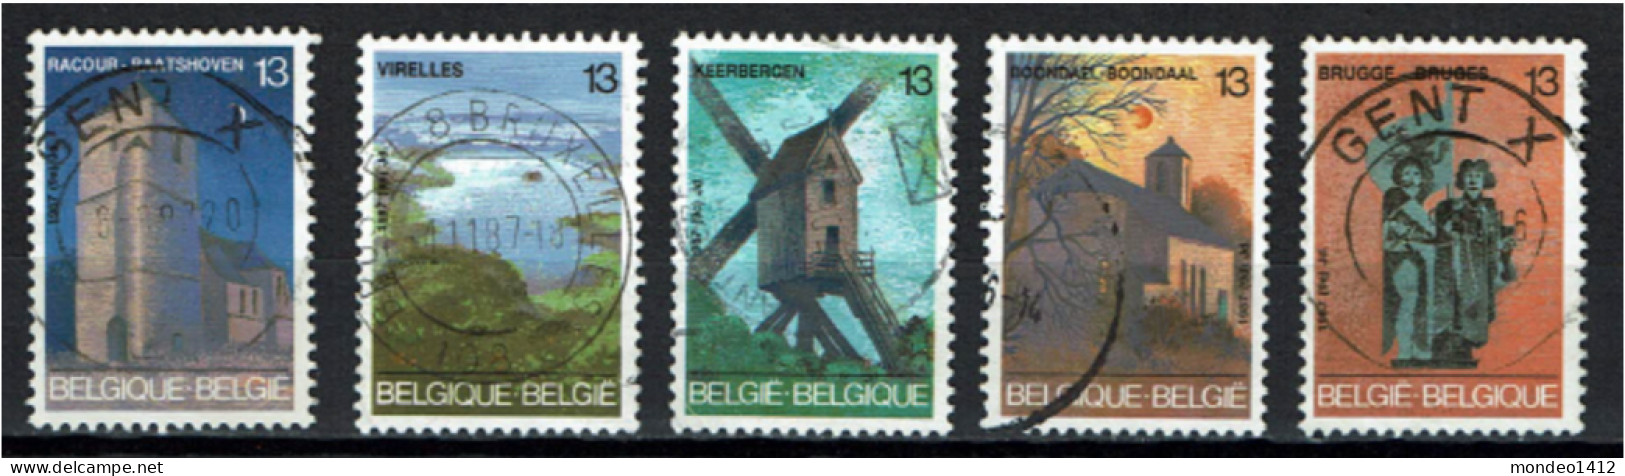 België 1987 OBP 2254/2258 - Y&T 2254/58 - Toerisme, Raatshoven, Chimay, Keerbergen, Brussel, Brugge - Oblitérés